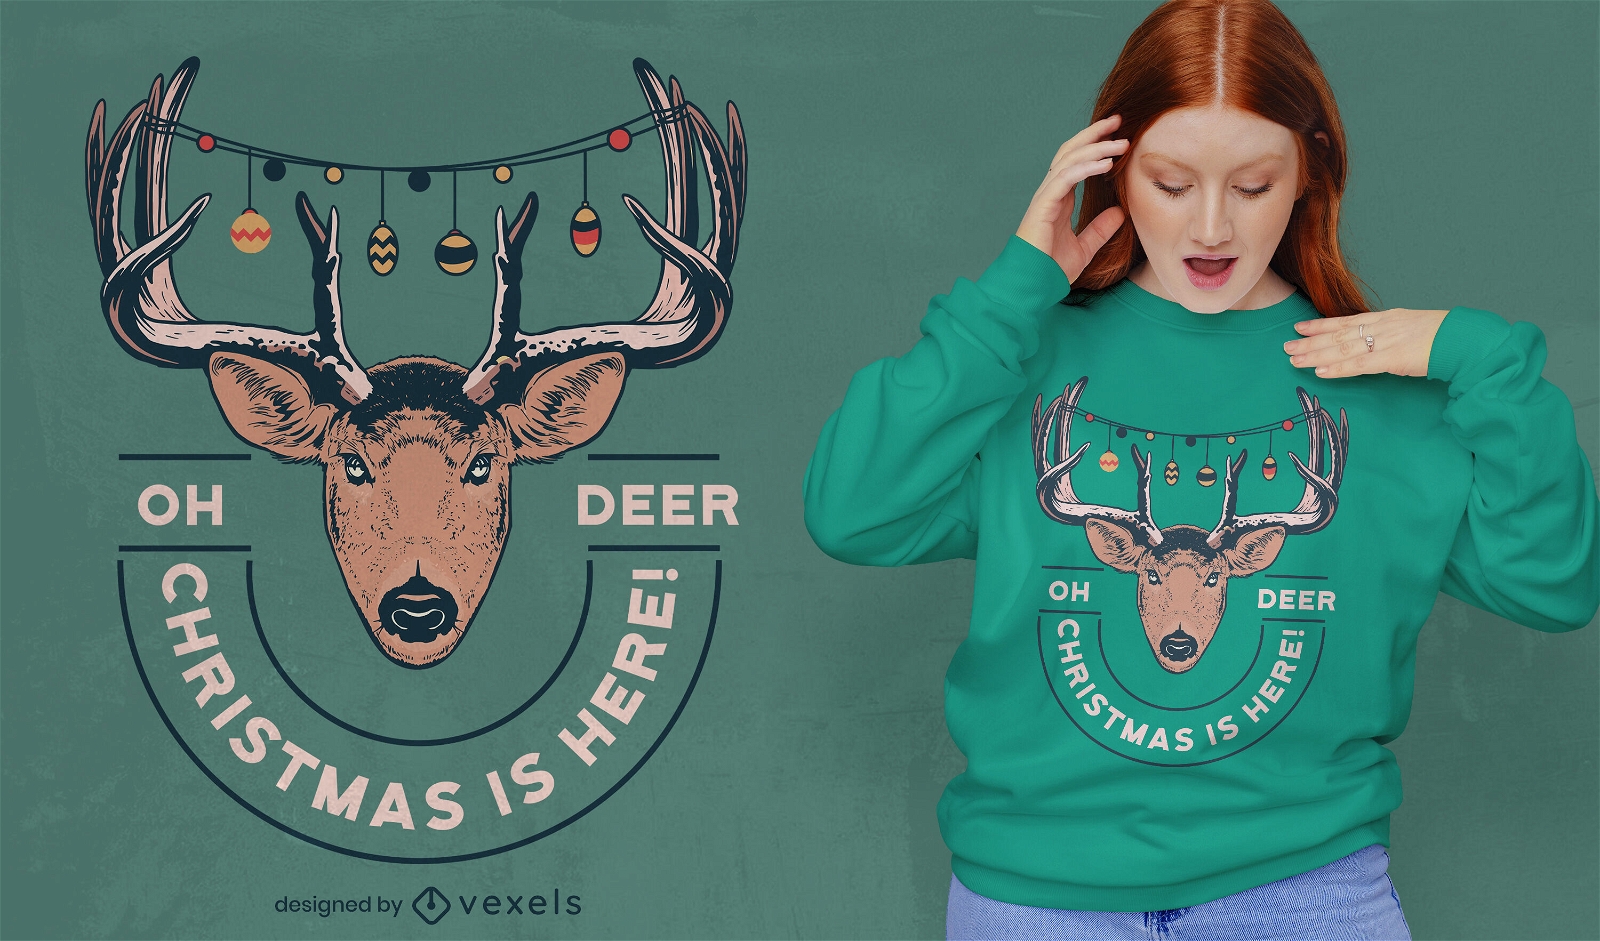 Deer with Christmas lights t-shirt design